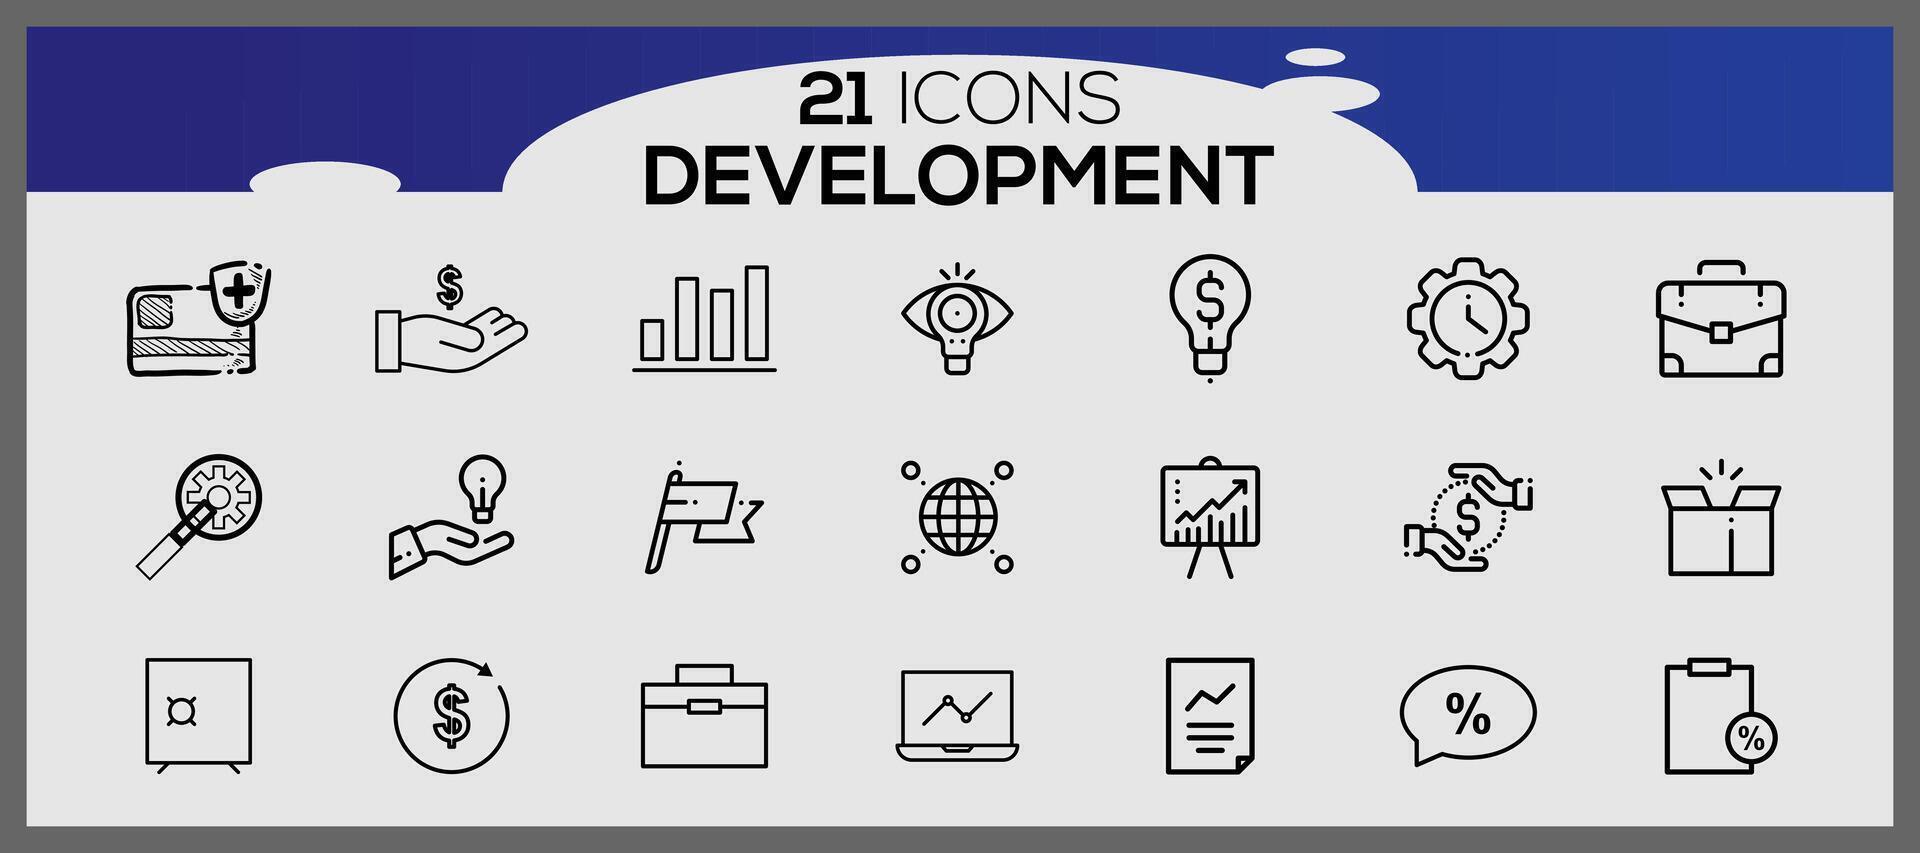 seo and development icons set web design icons set simple set seo and development line icons vector